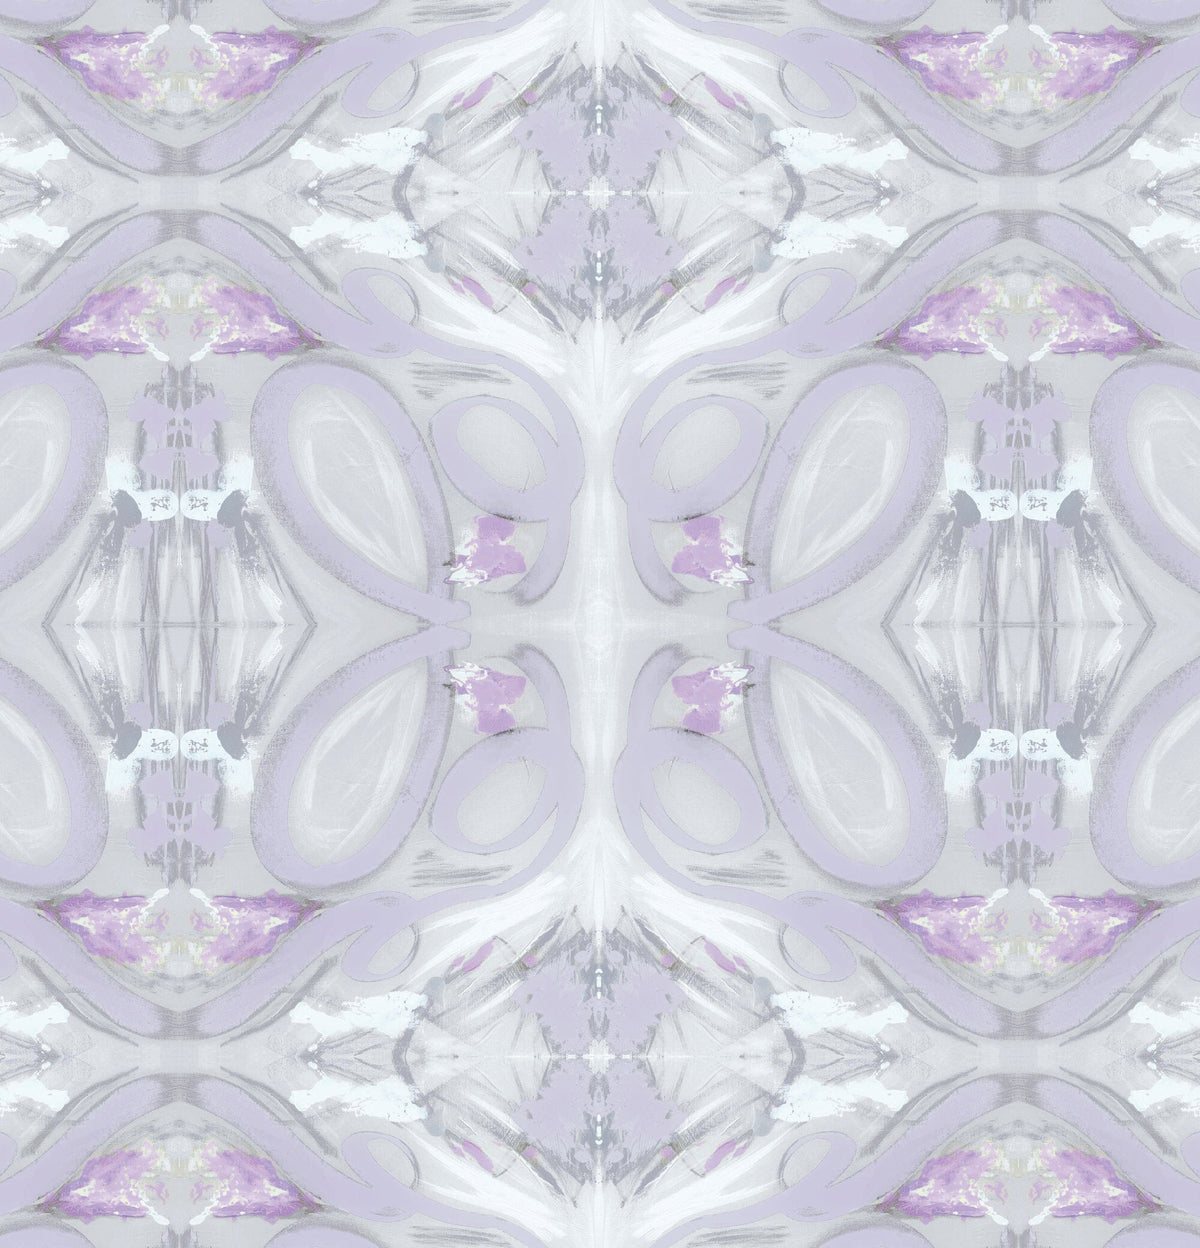 Duvet - Kaleidoscope Lavender Grey Bedding, Duvets MWW 